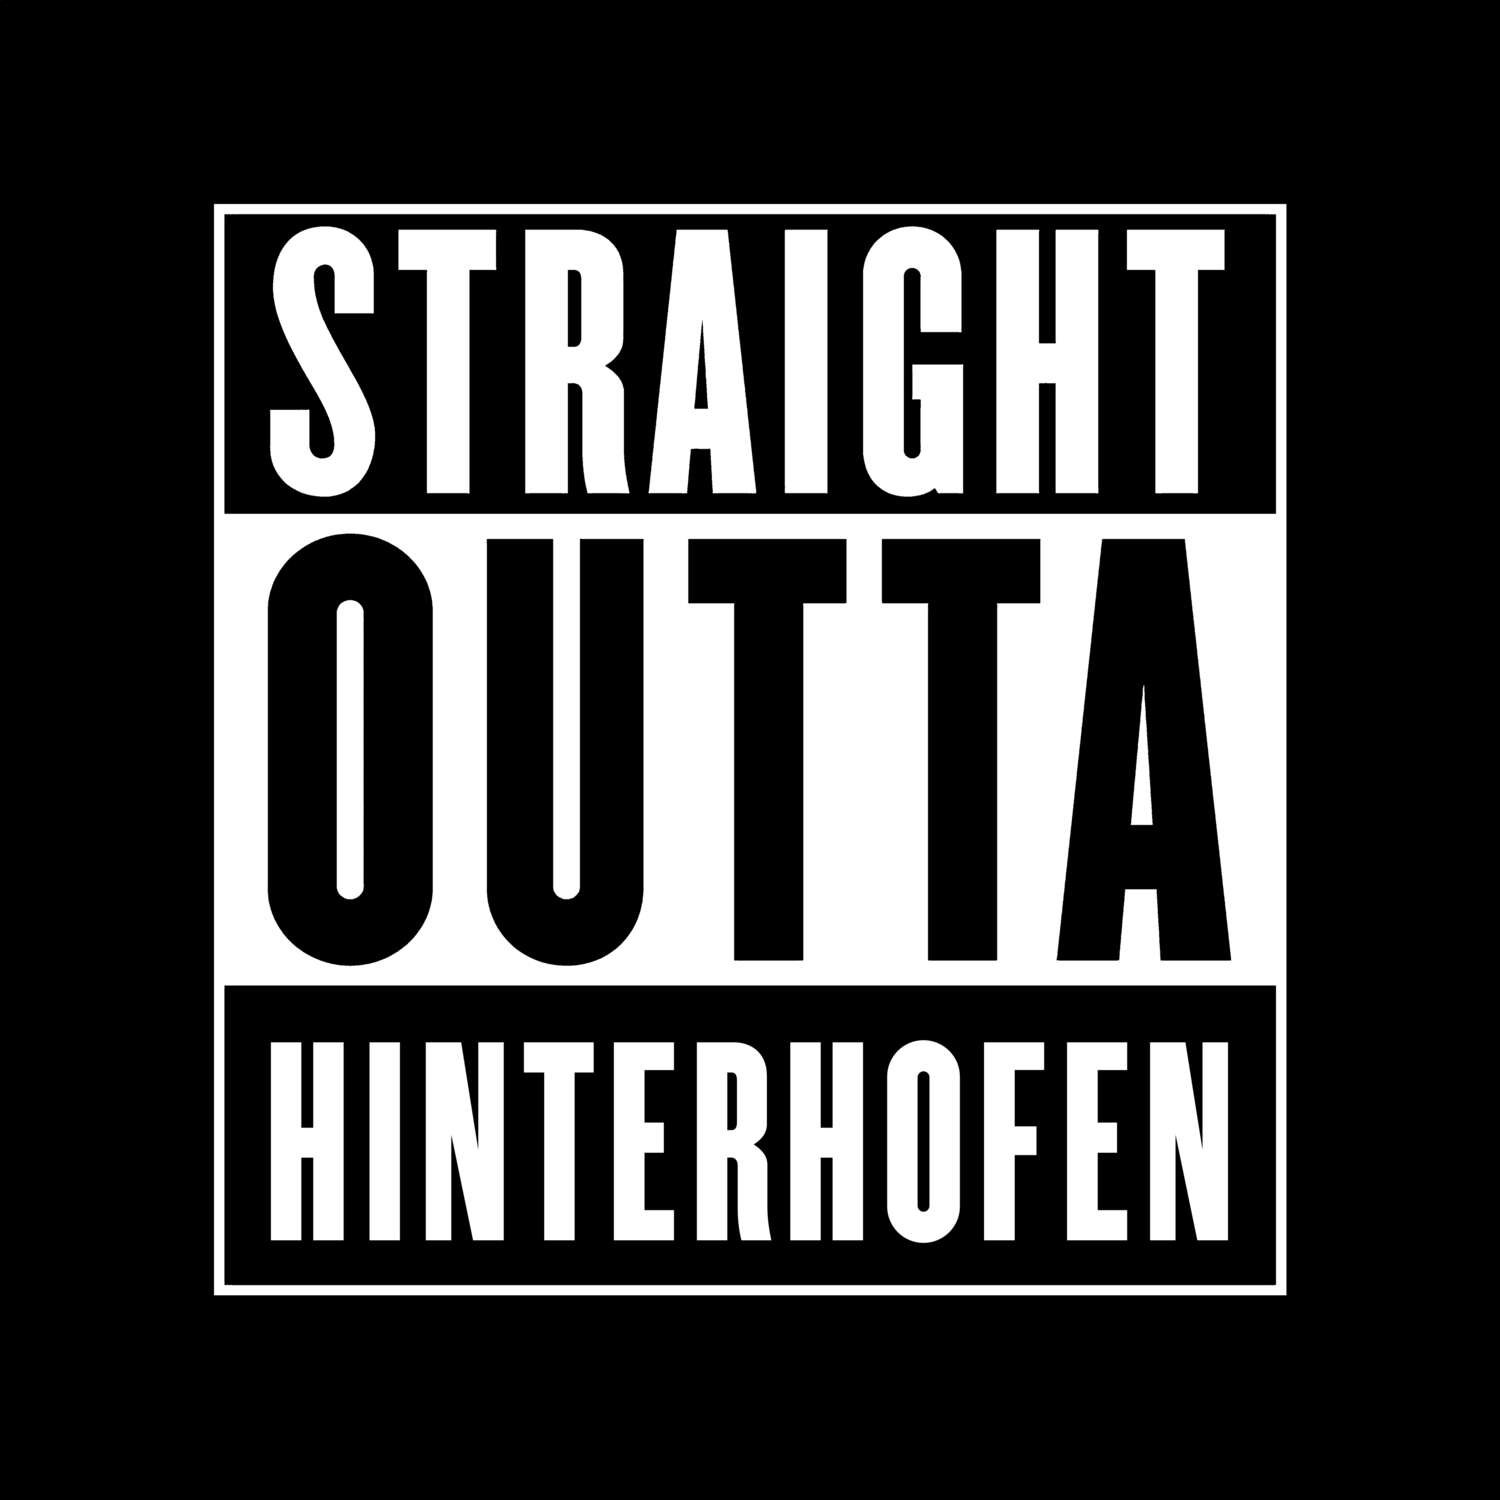 Hinterhofen T-Shirt »Straight Outta«